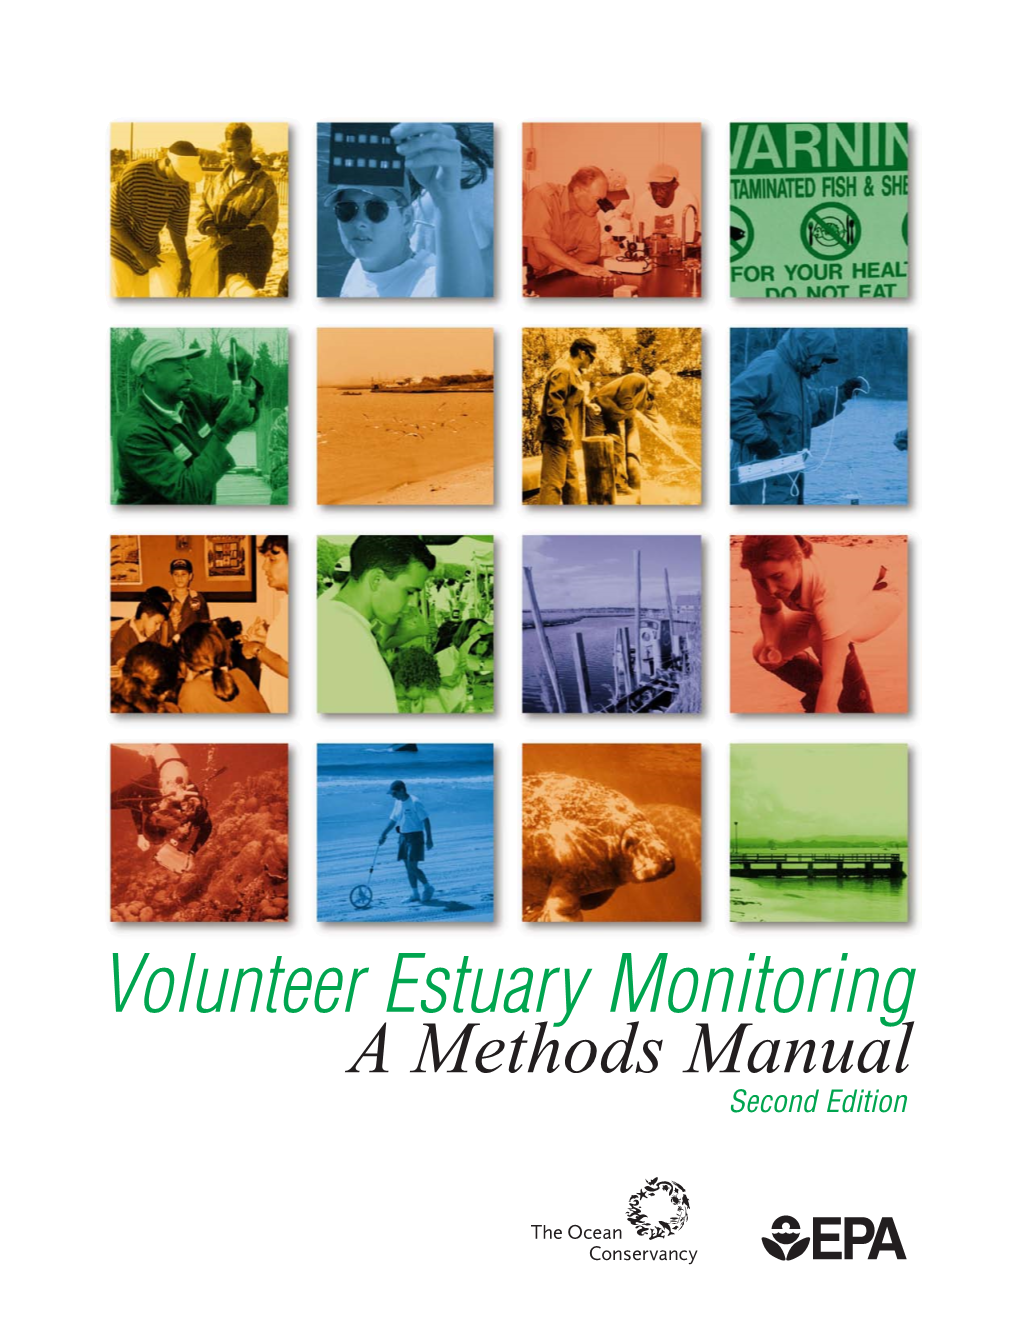 Voluntary Estuary Monitoring Manual, March 2006